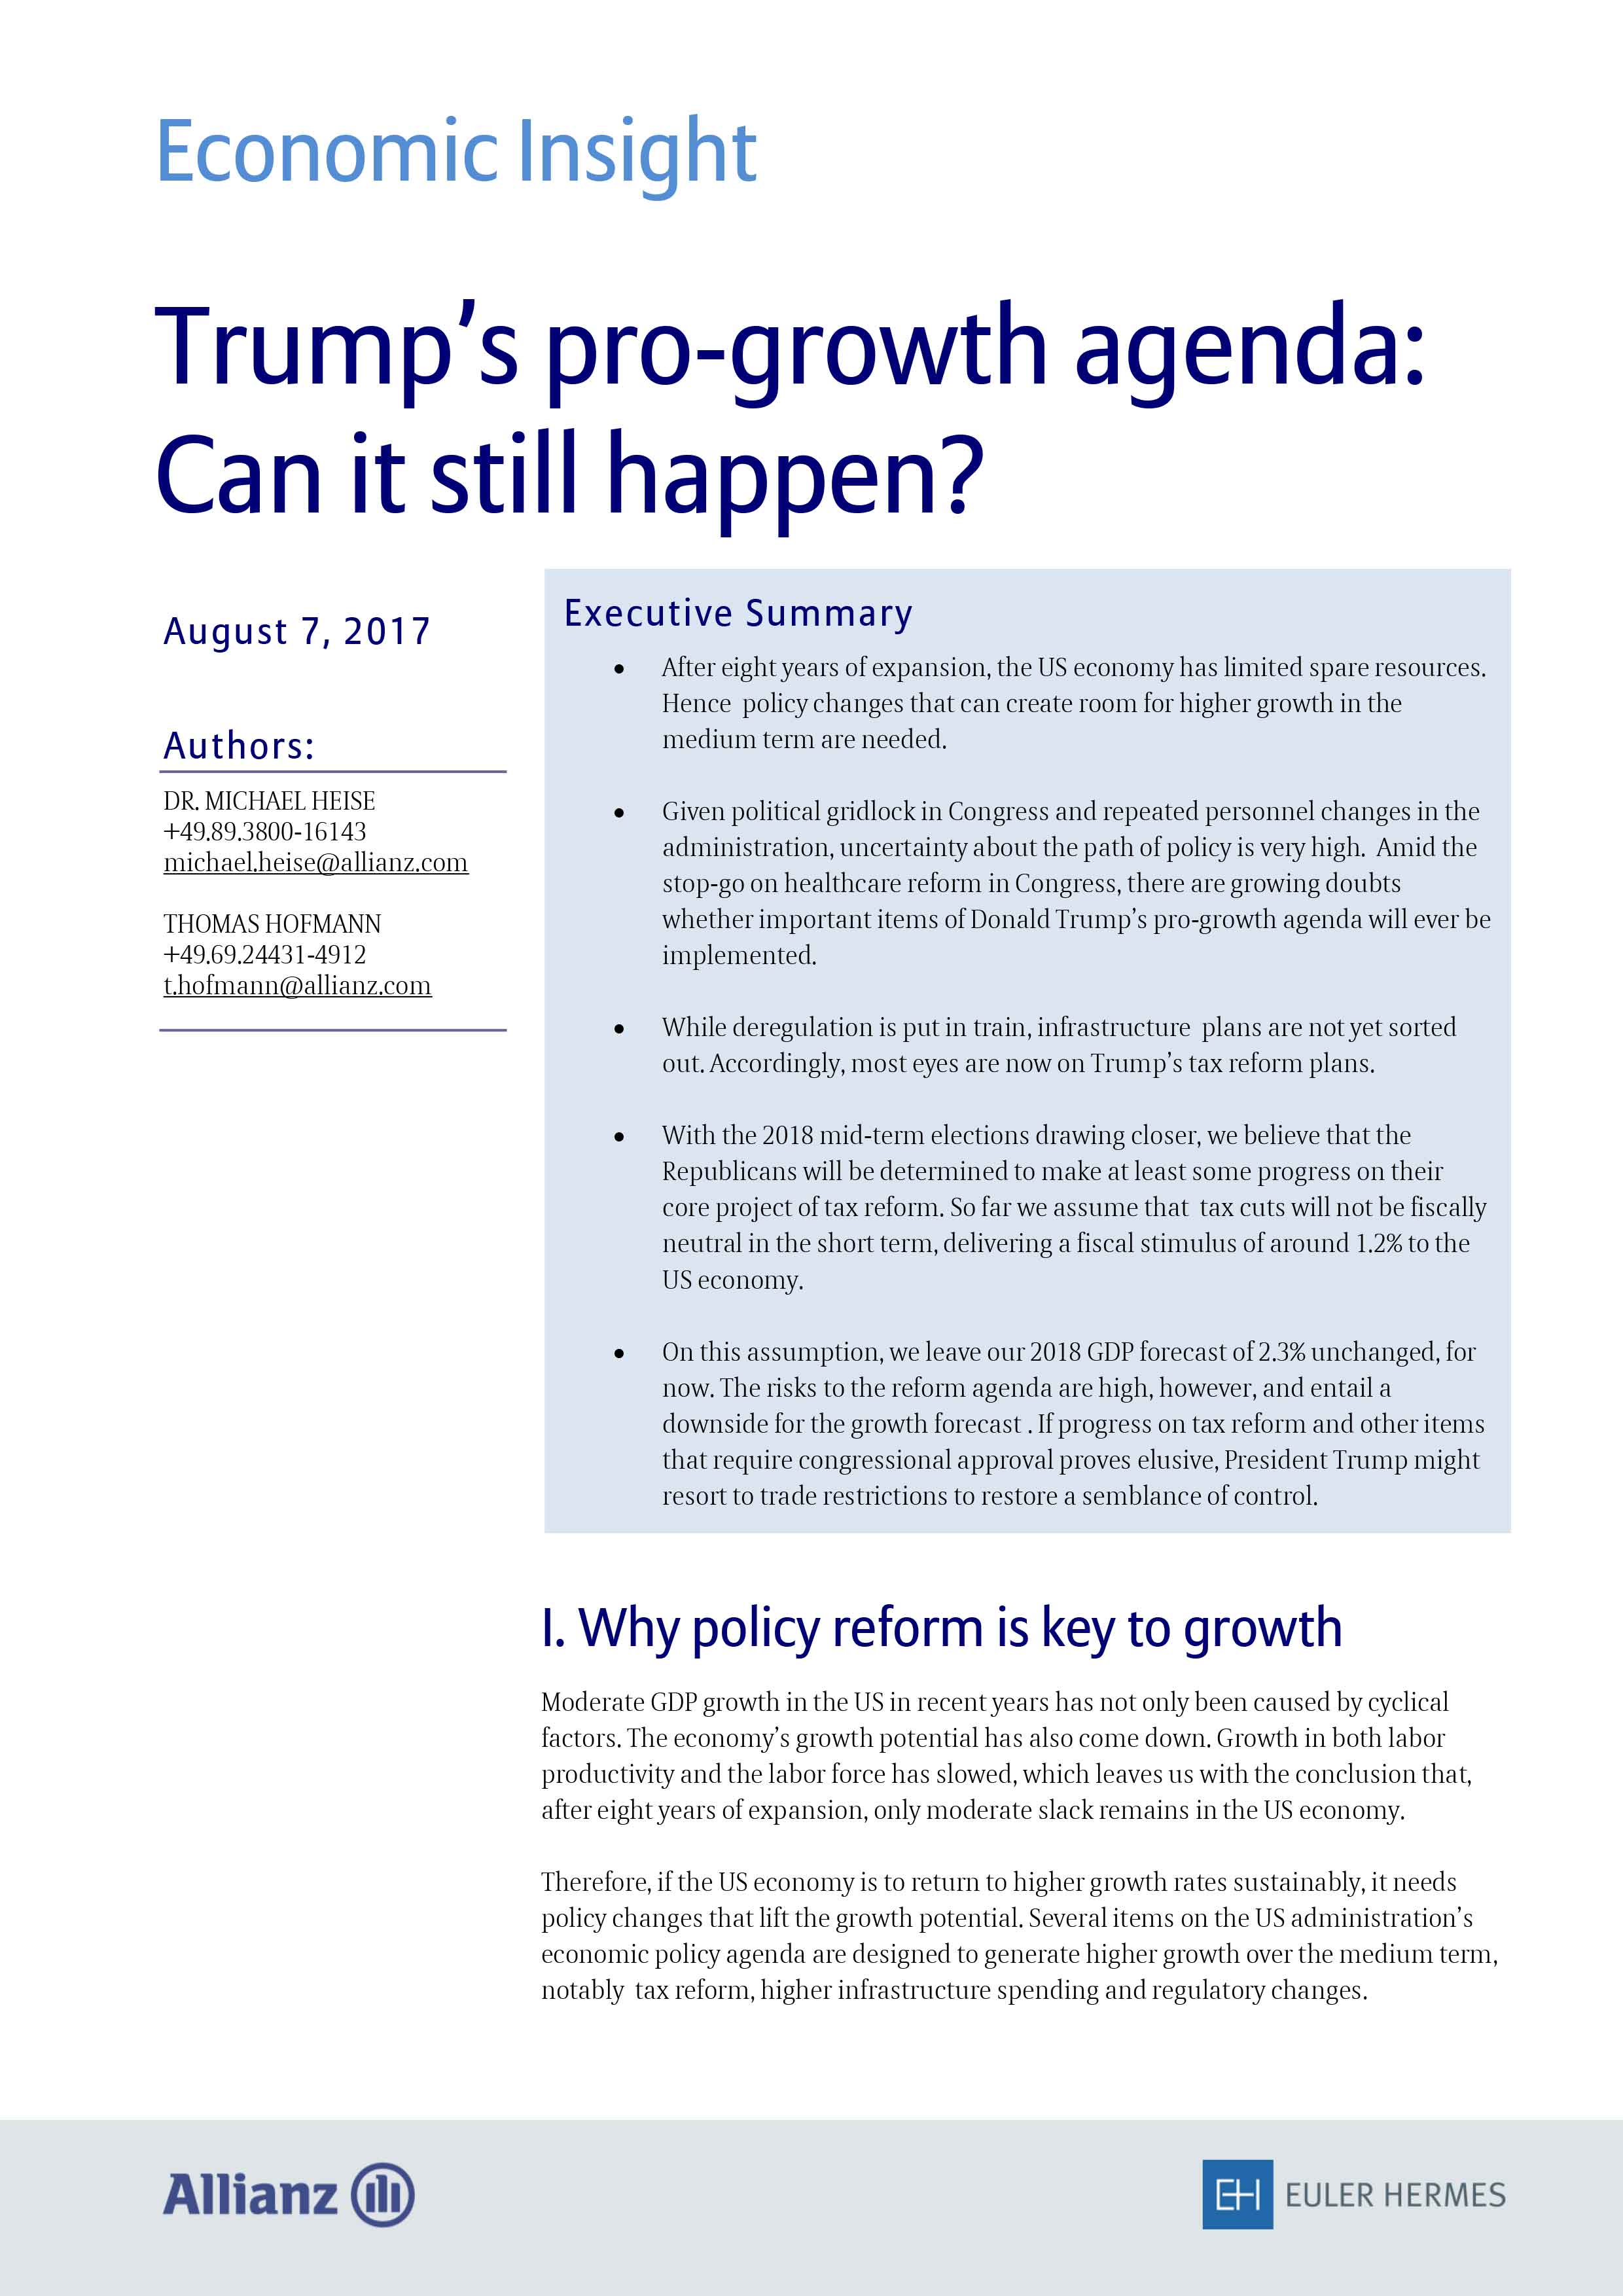 Trump's pro-growth agenda: can it still happen?